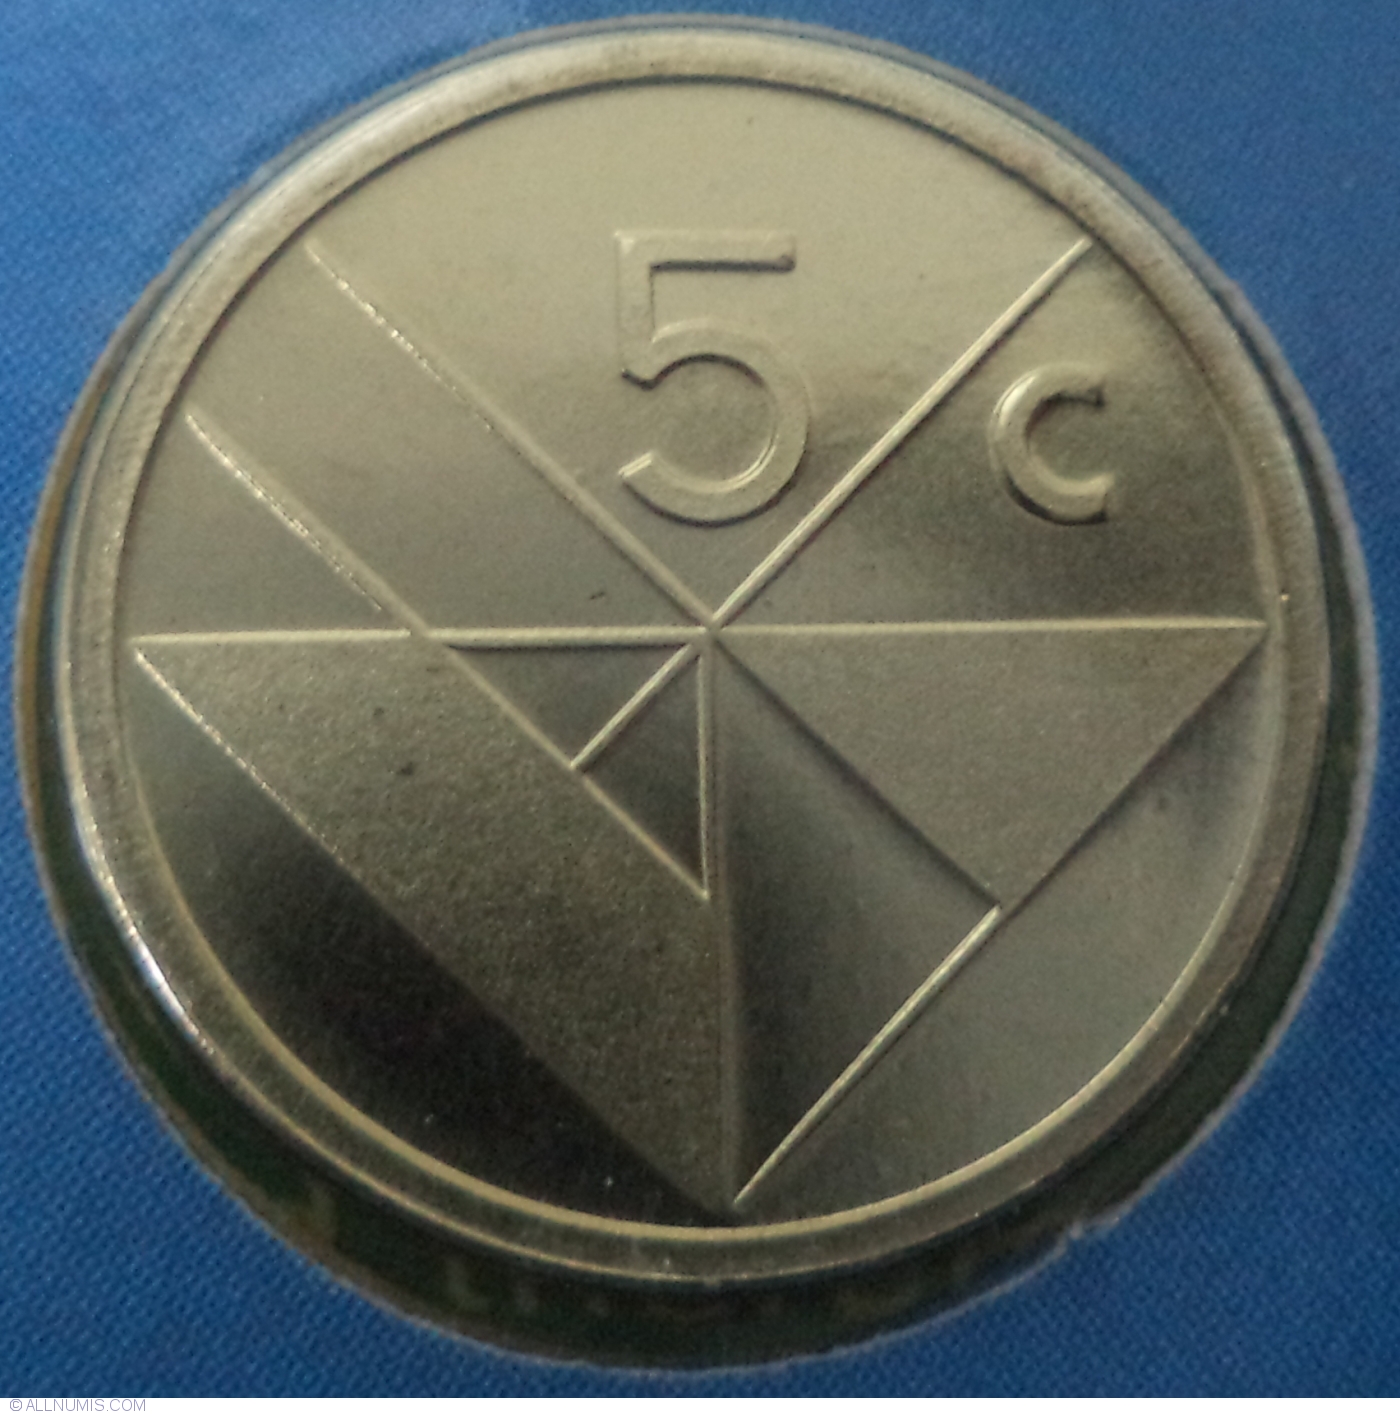 5 Cents 1990, Dutch State (1986-2000) - Aruba - Coin - 41880